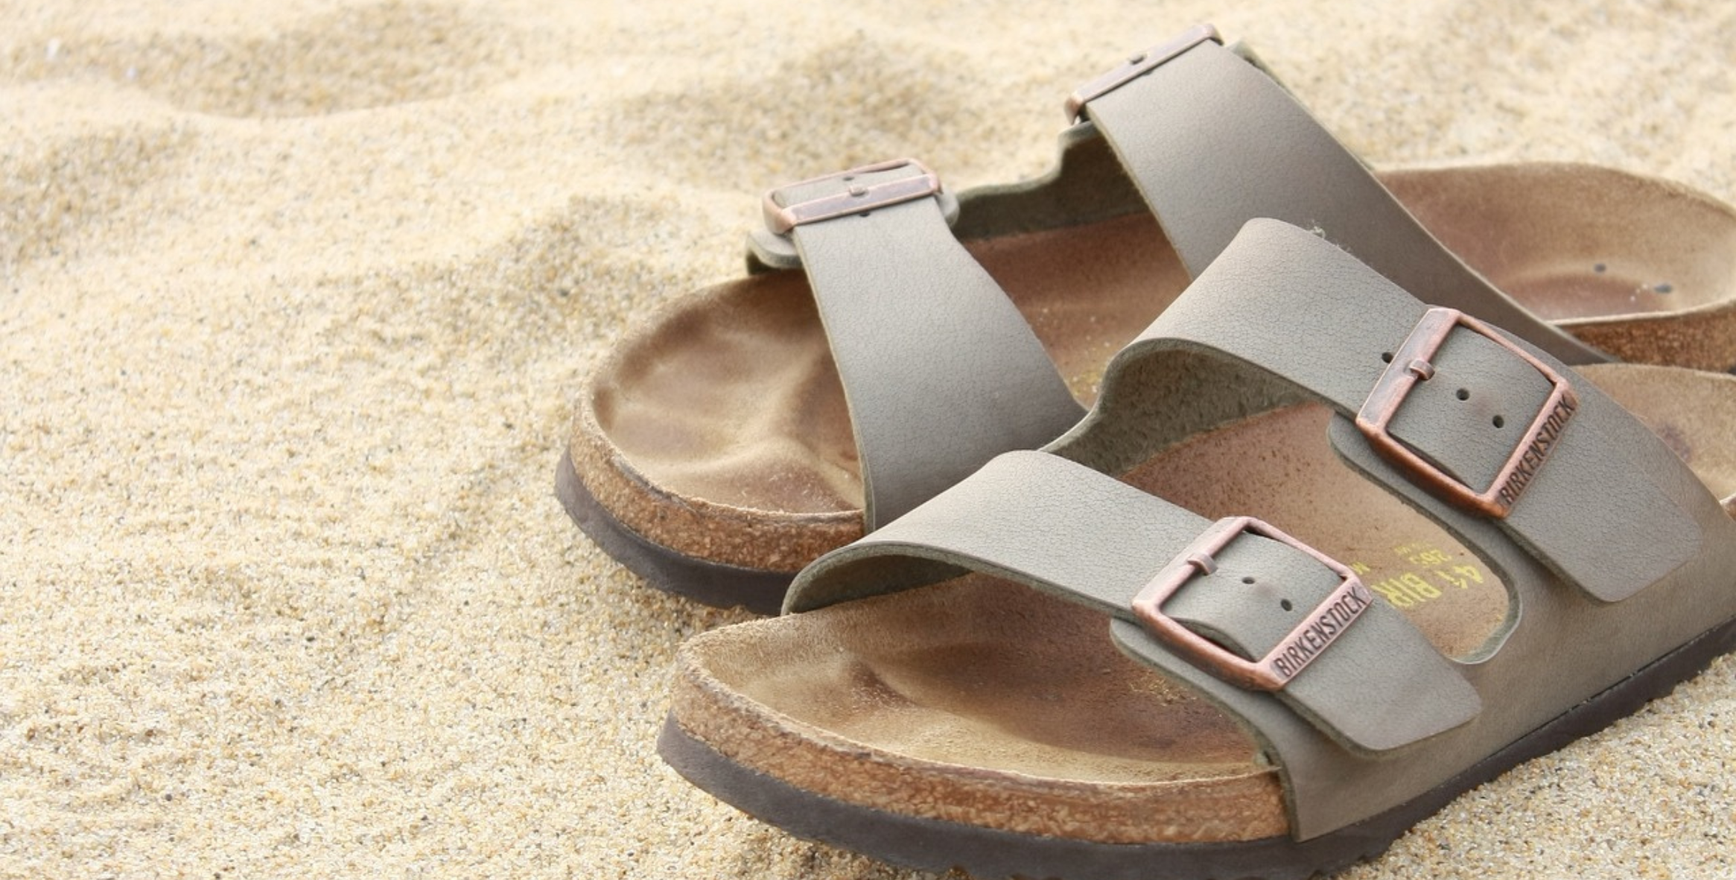 Birkenstock sandals on sand